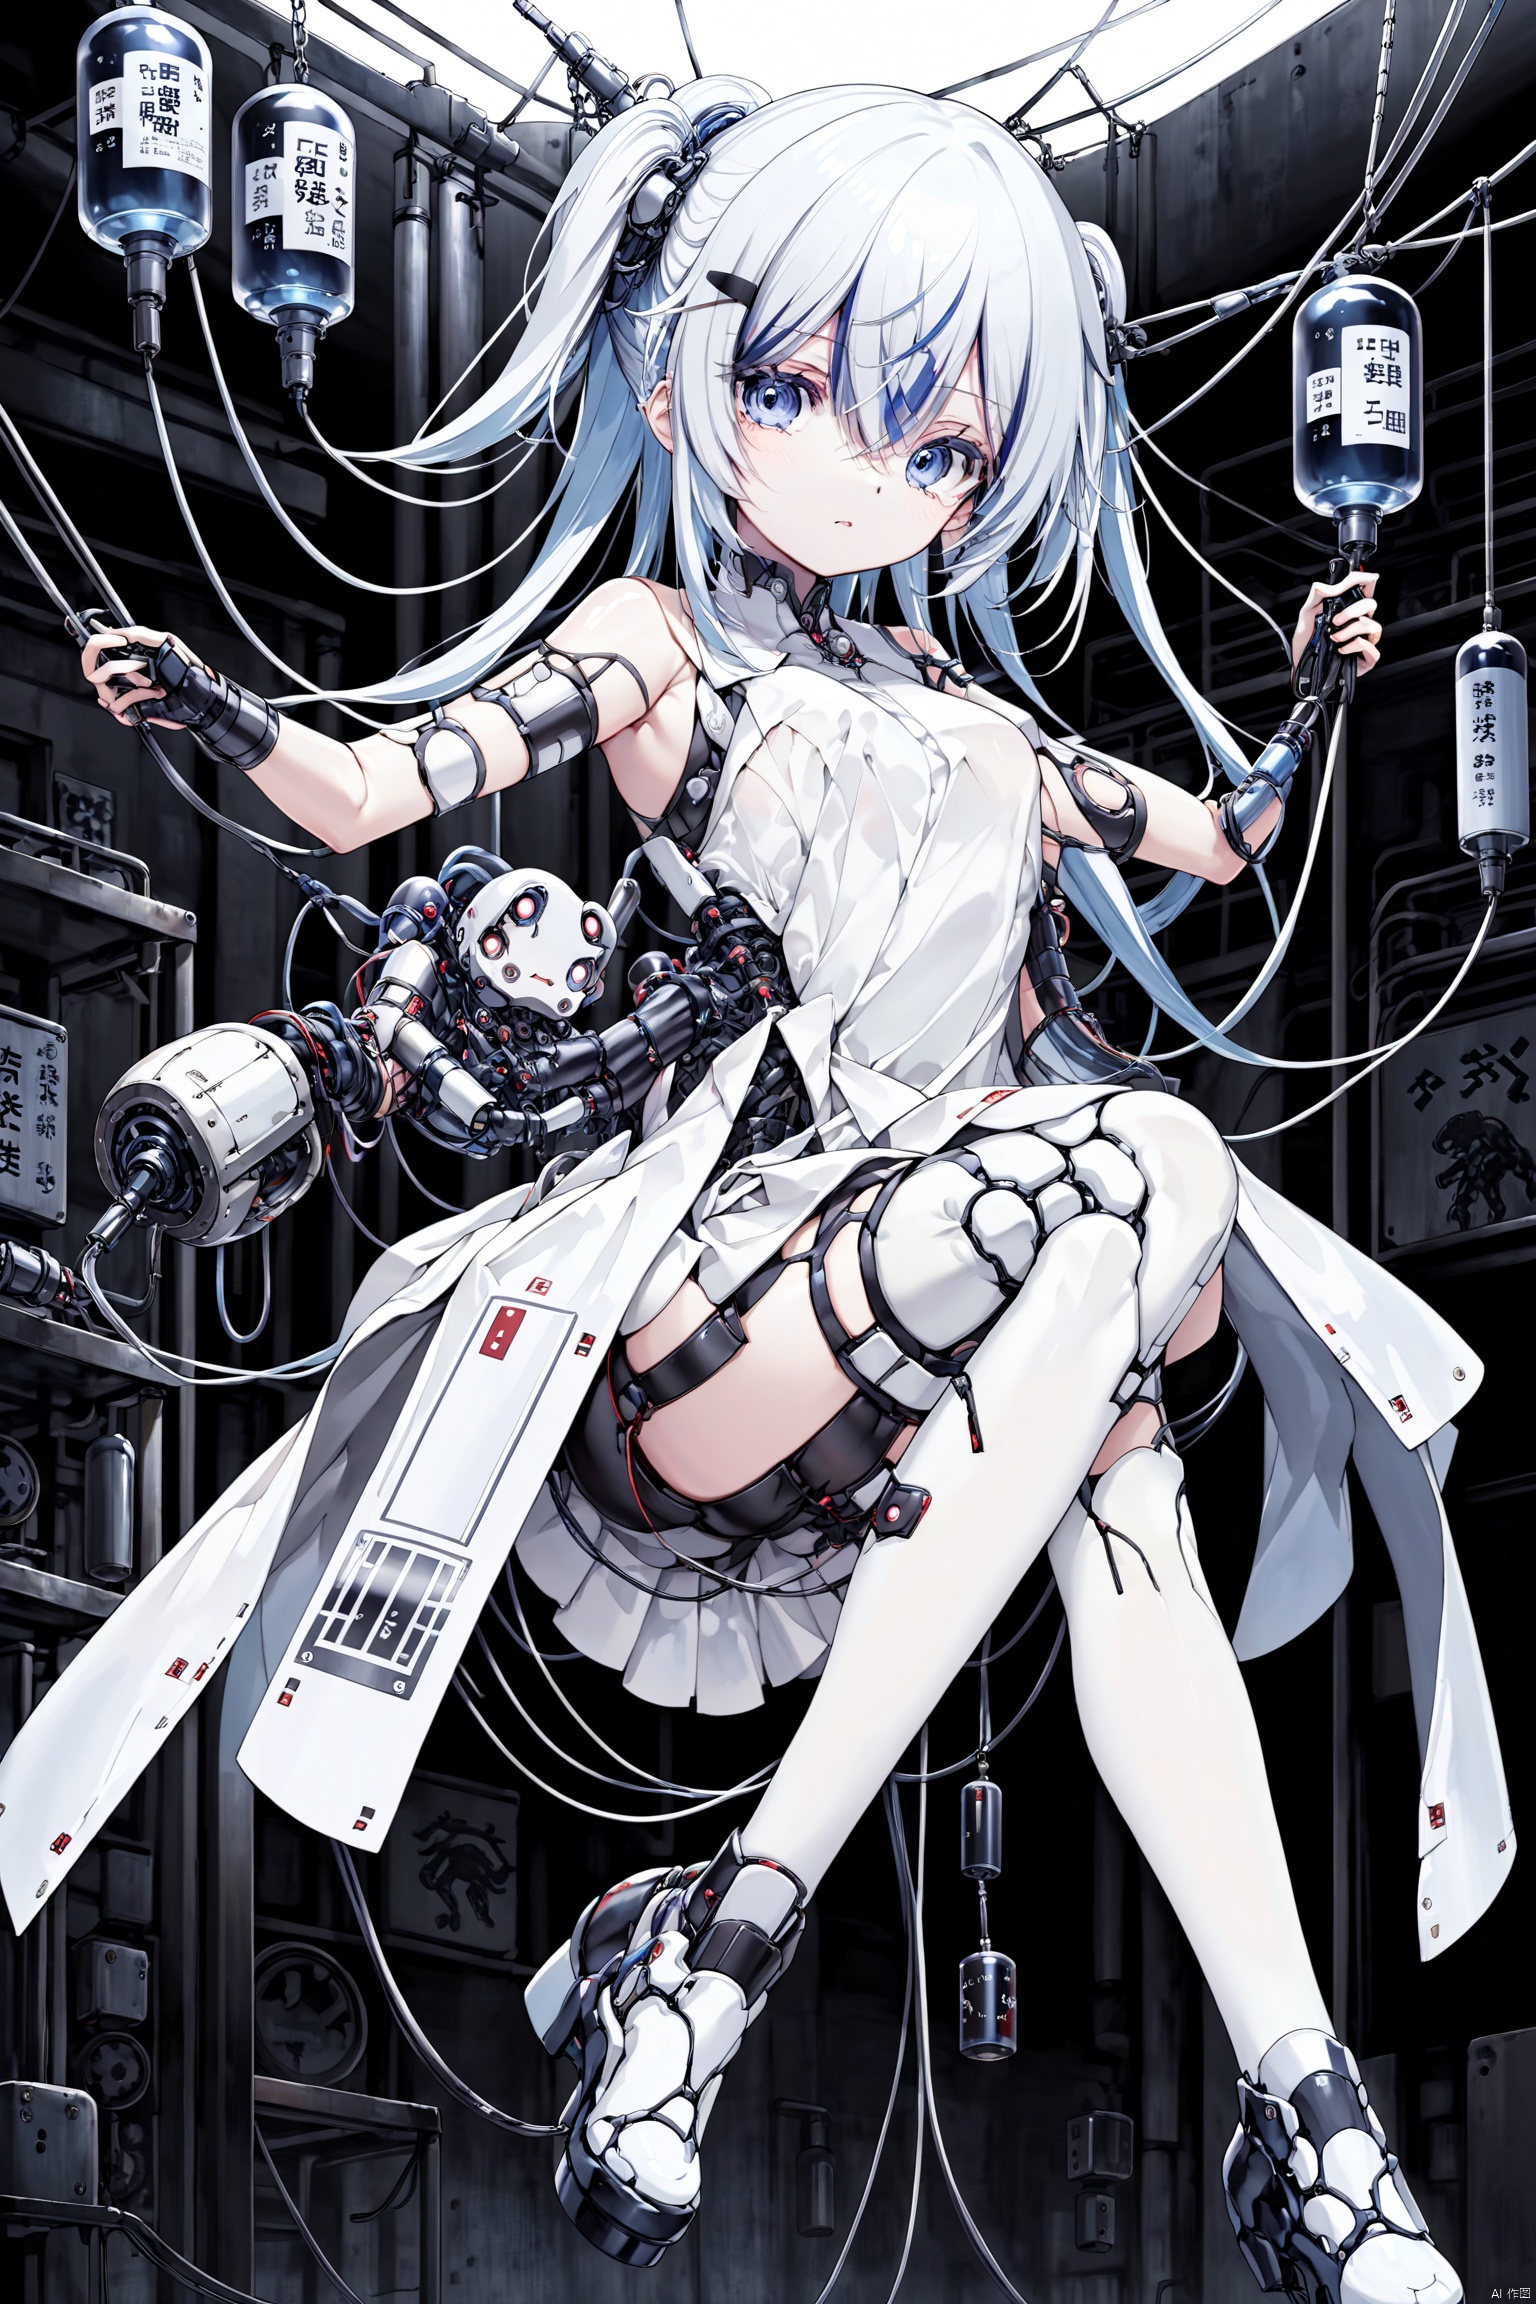  1 woman, robot cyborg
full body, hanging in the air
anime
broken maintenance
oriental
poetic
horror
ghost
tubes , wires
by
 Akihiko Yoshida
